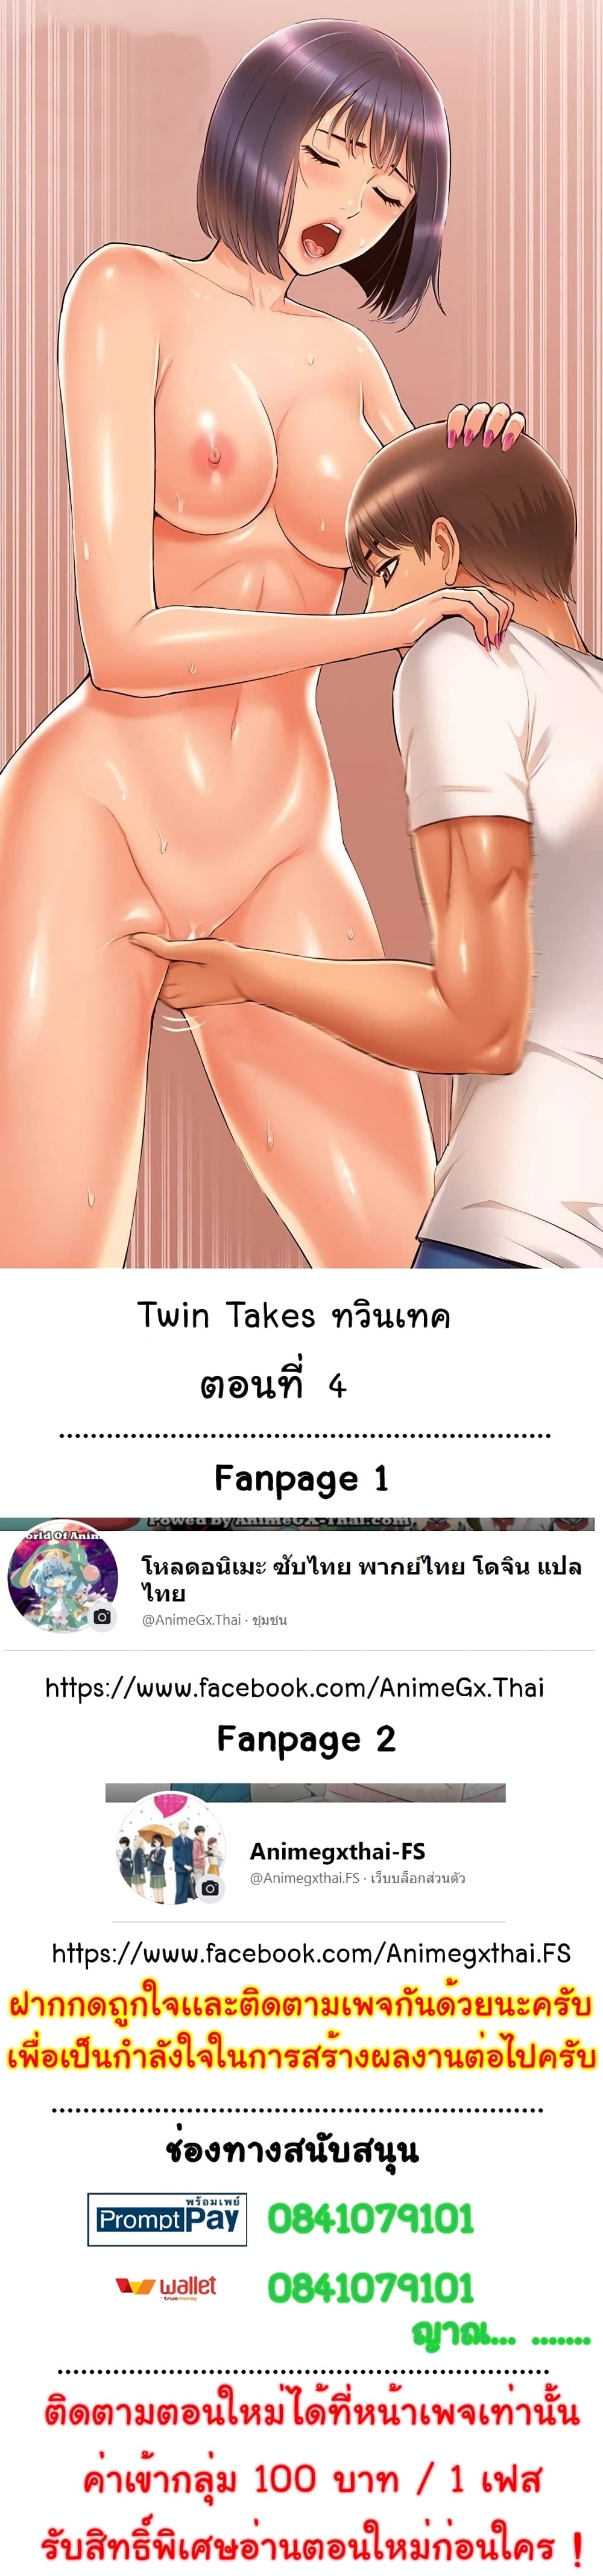 Twin Takes 4 01